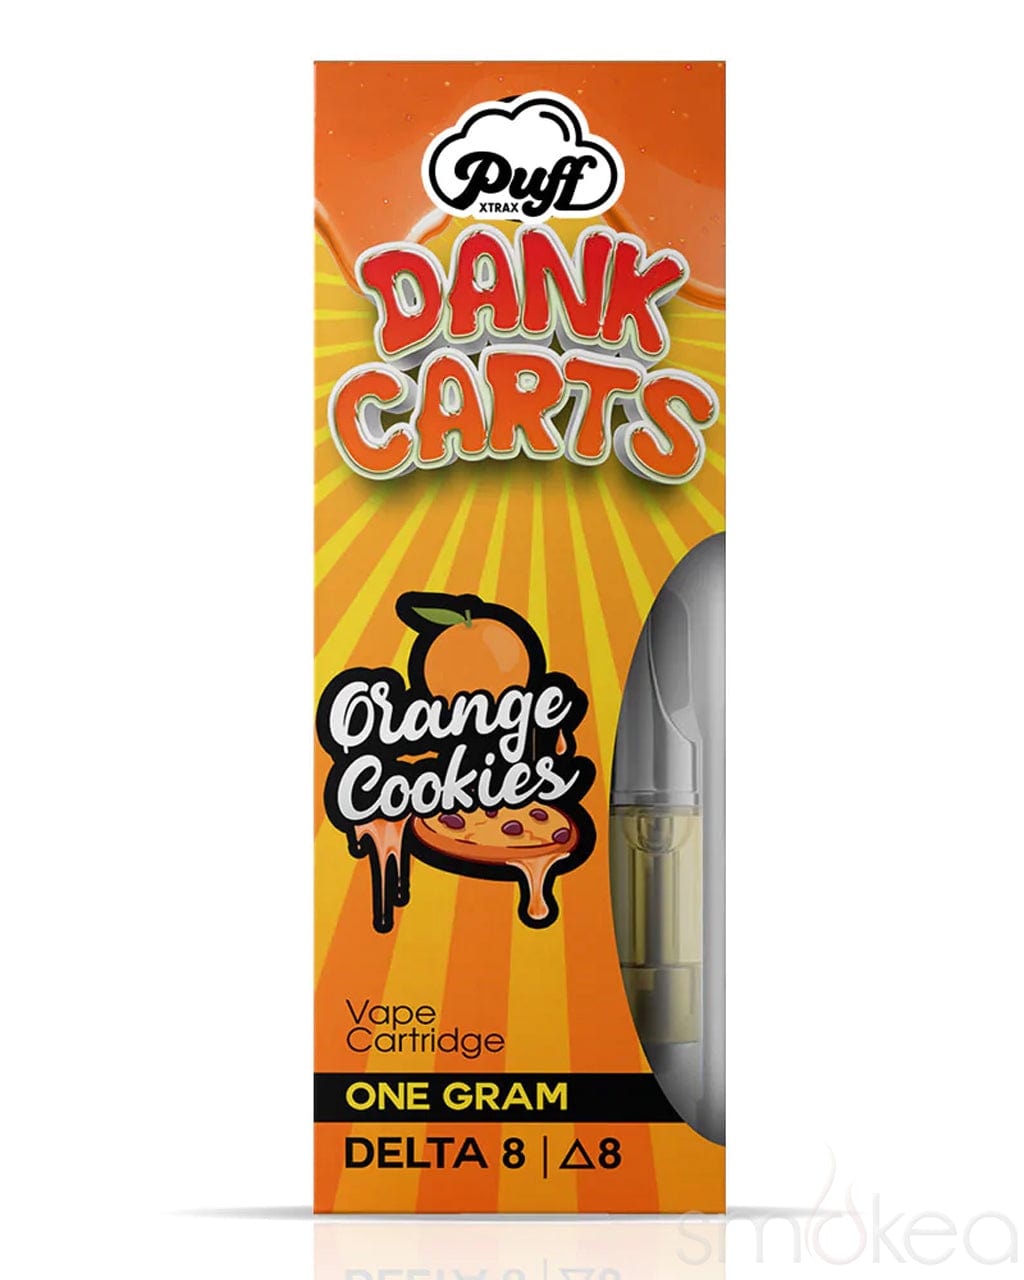 Puff Xtrax Delta 8 Dank Carts Vape Cartridge Orange Cookies SMOKEA®